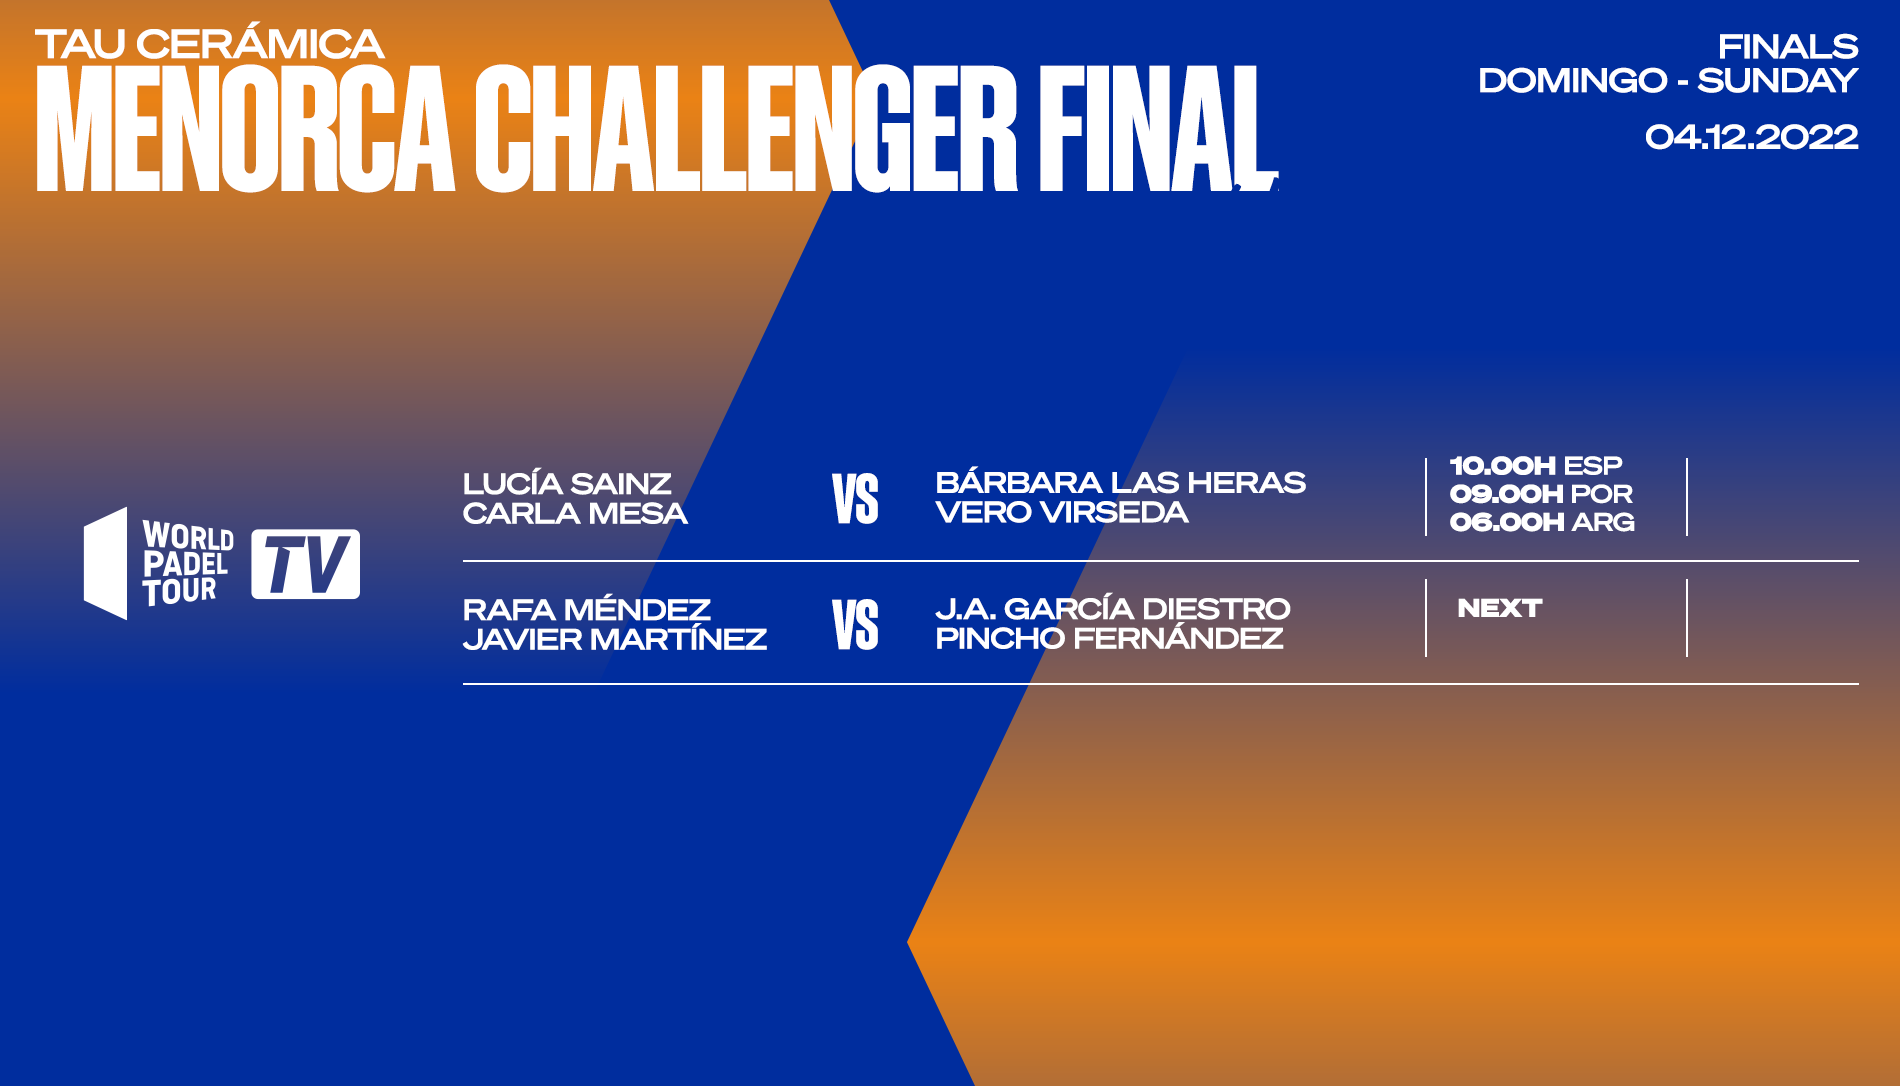 LIVE: Follow the Menorca Challenger Final here!